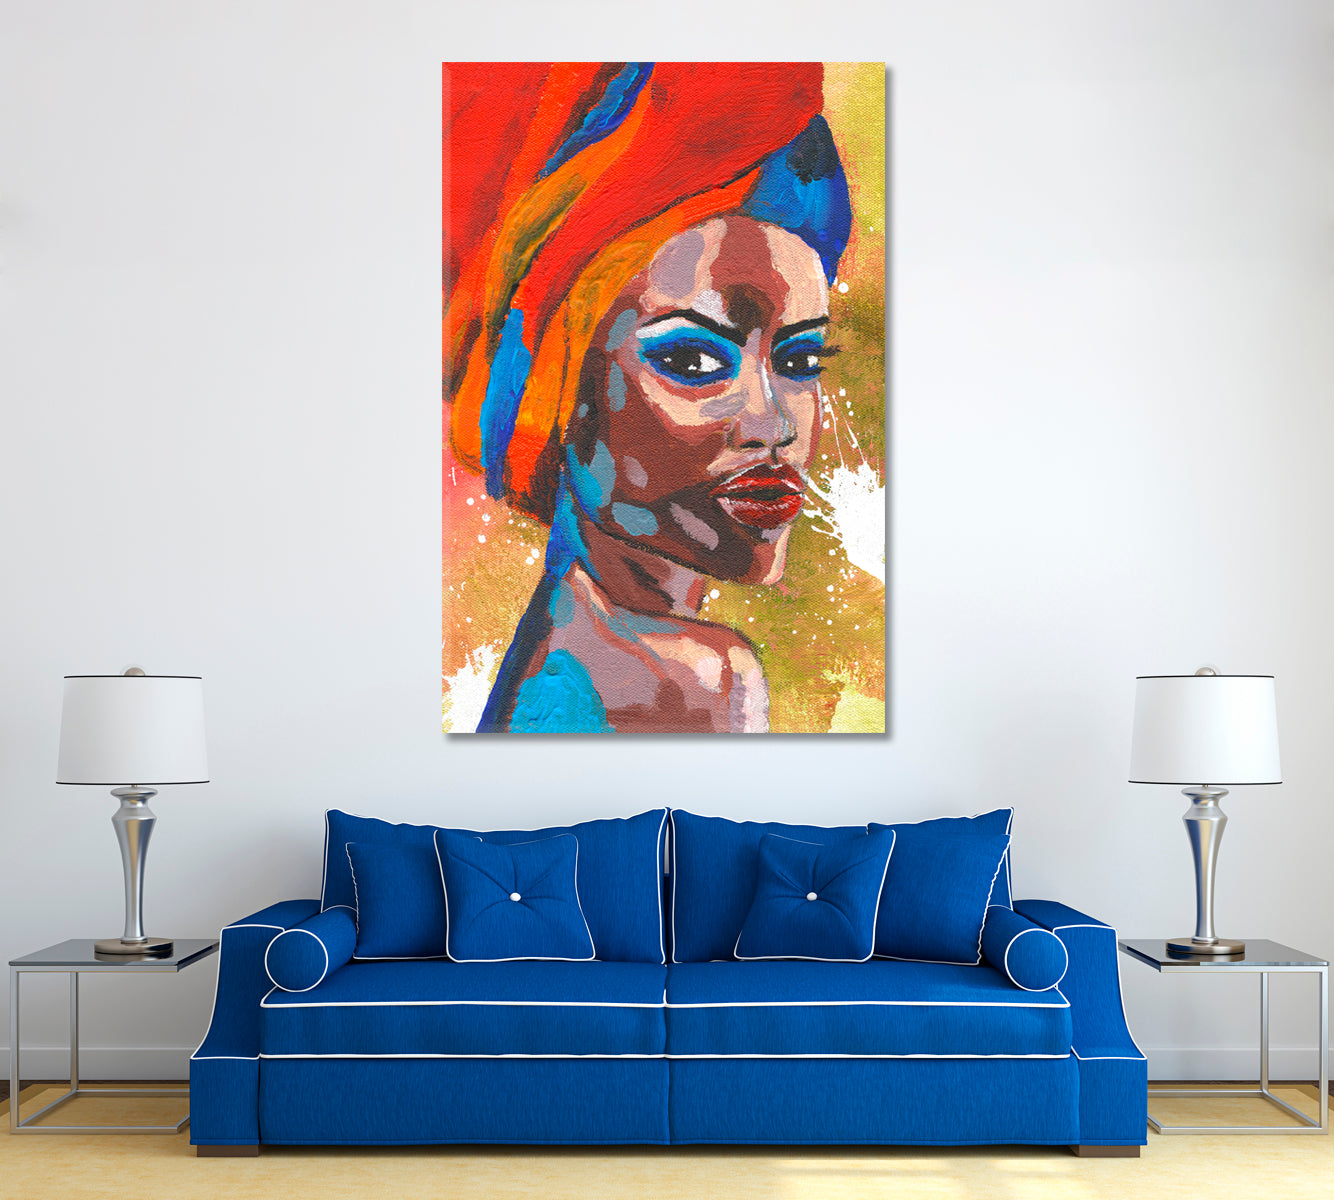 African Woman in Turban Pop Art Style Canvas Print ArtLexy   